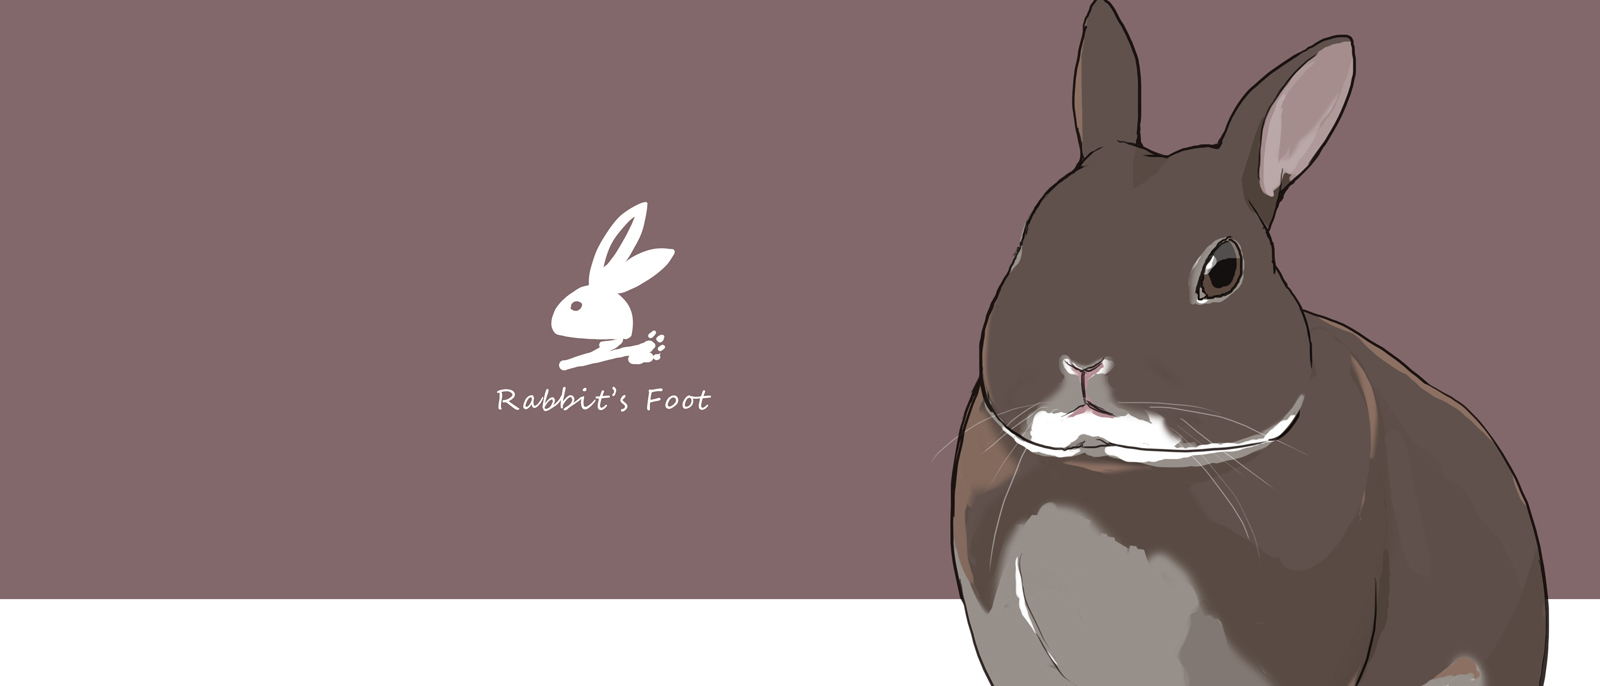 Rabbits foot